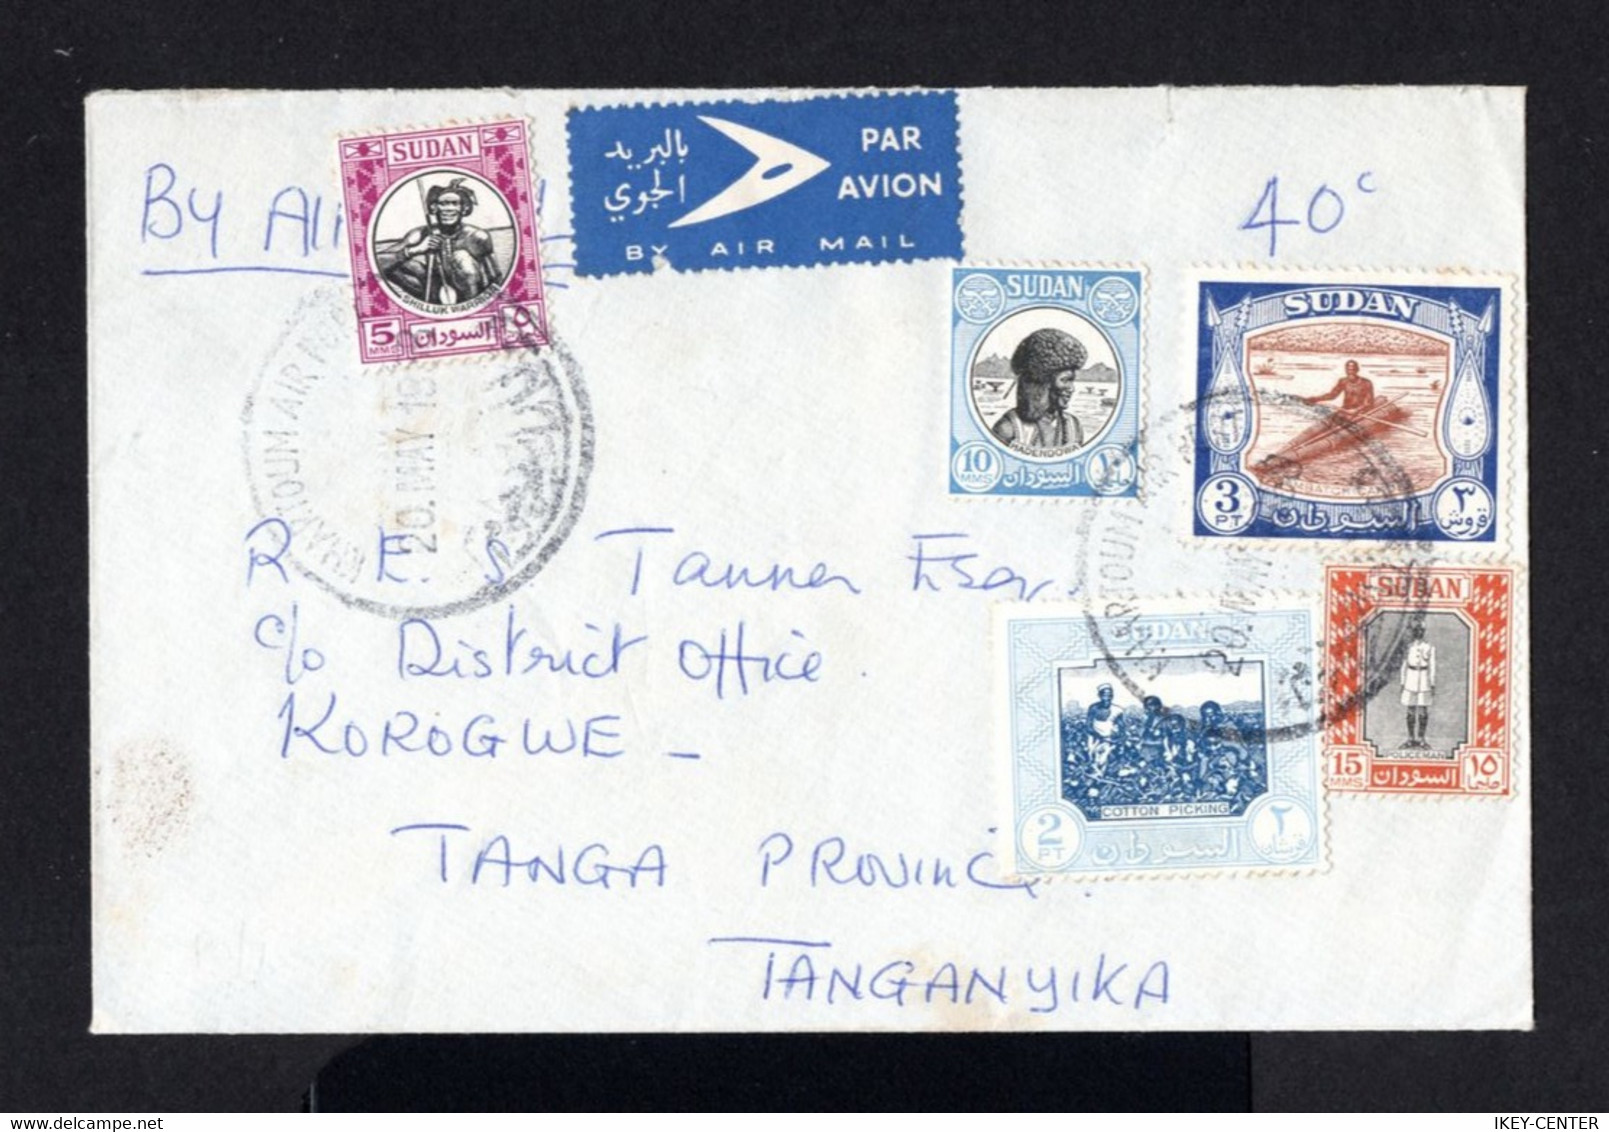 S4836-SUDAN-AIRMAIL COVER KHARTOUM To TANGA (tanganyika).1958.Enveloppe AERIEN SOUDAN - South Sudan